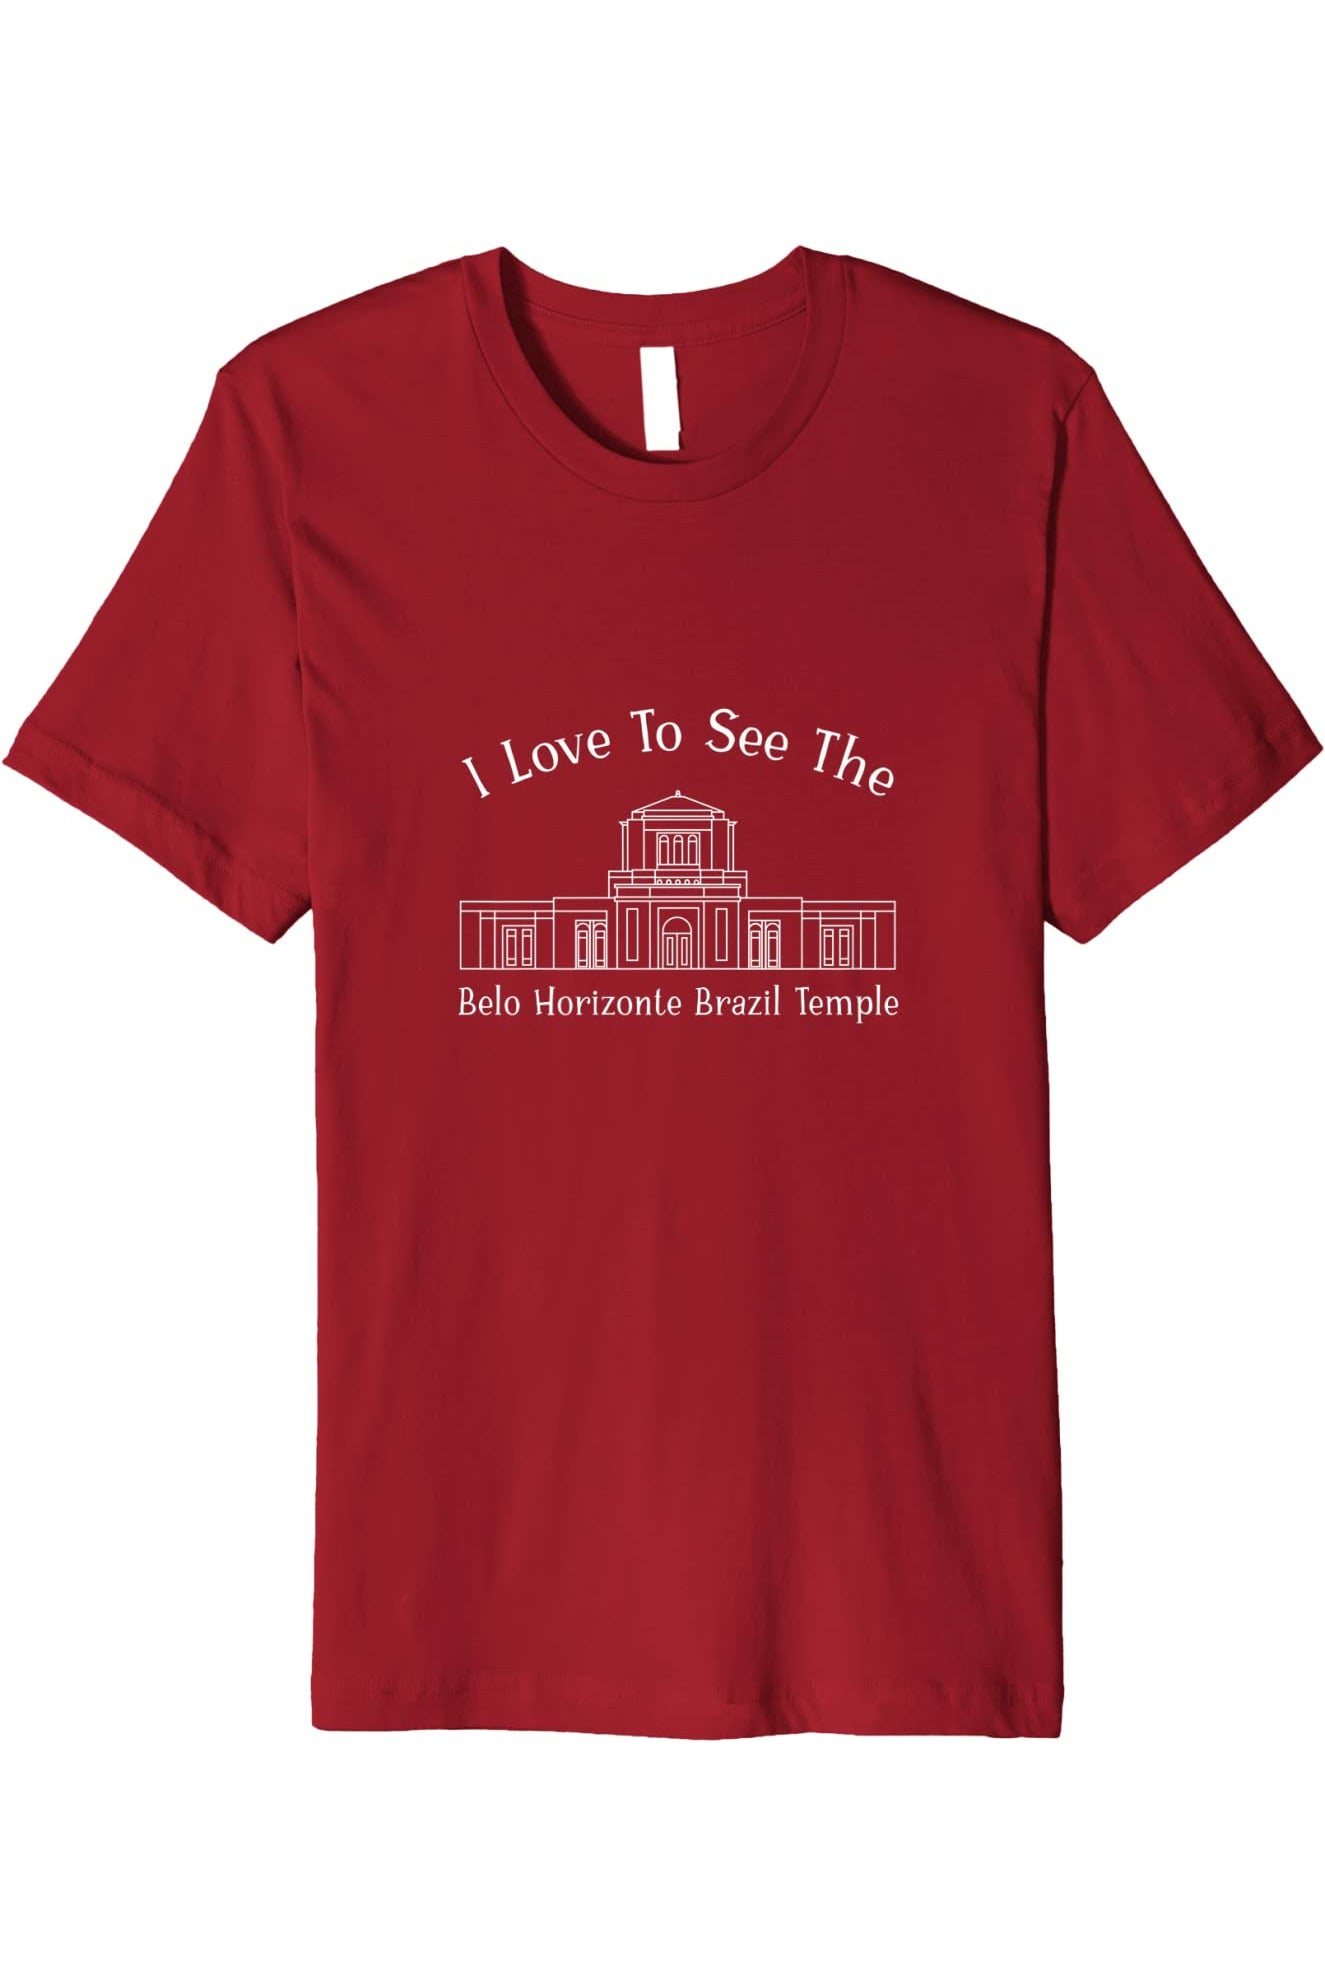 Belo Horizonte Brazil Temple T-Shirt - Premium - Happy Style (English) US